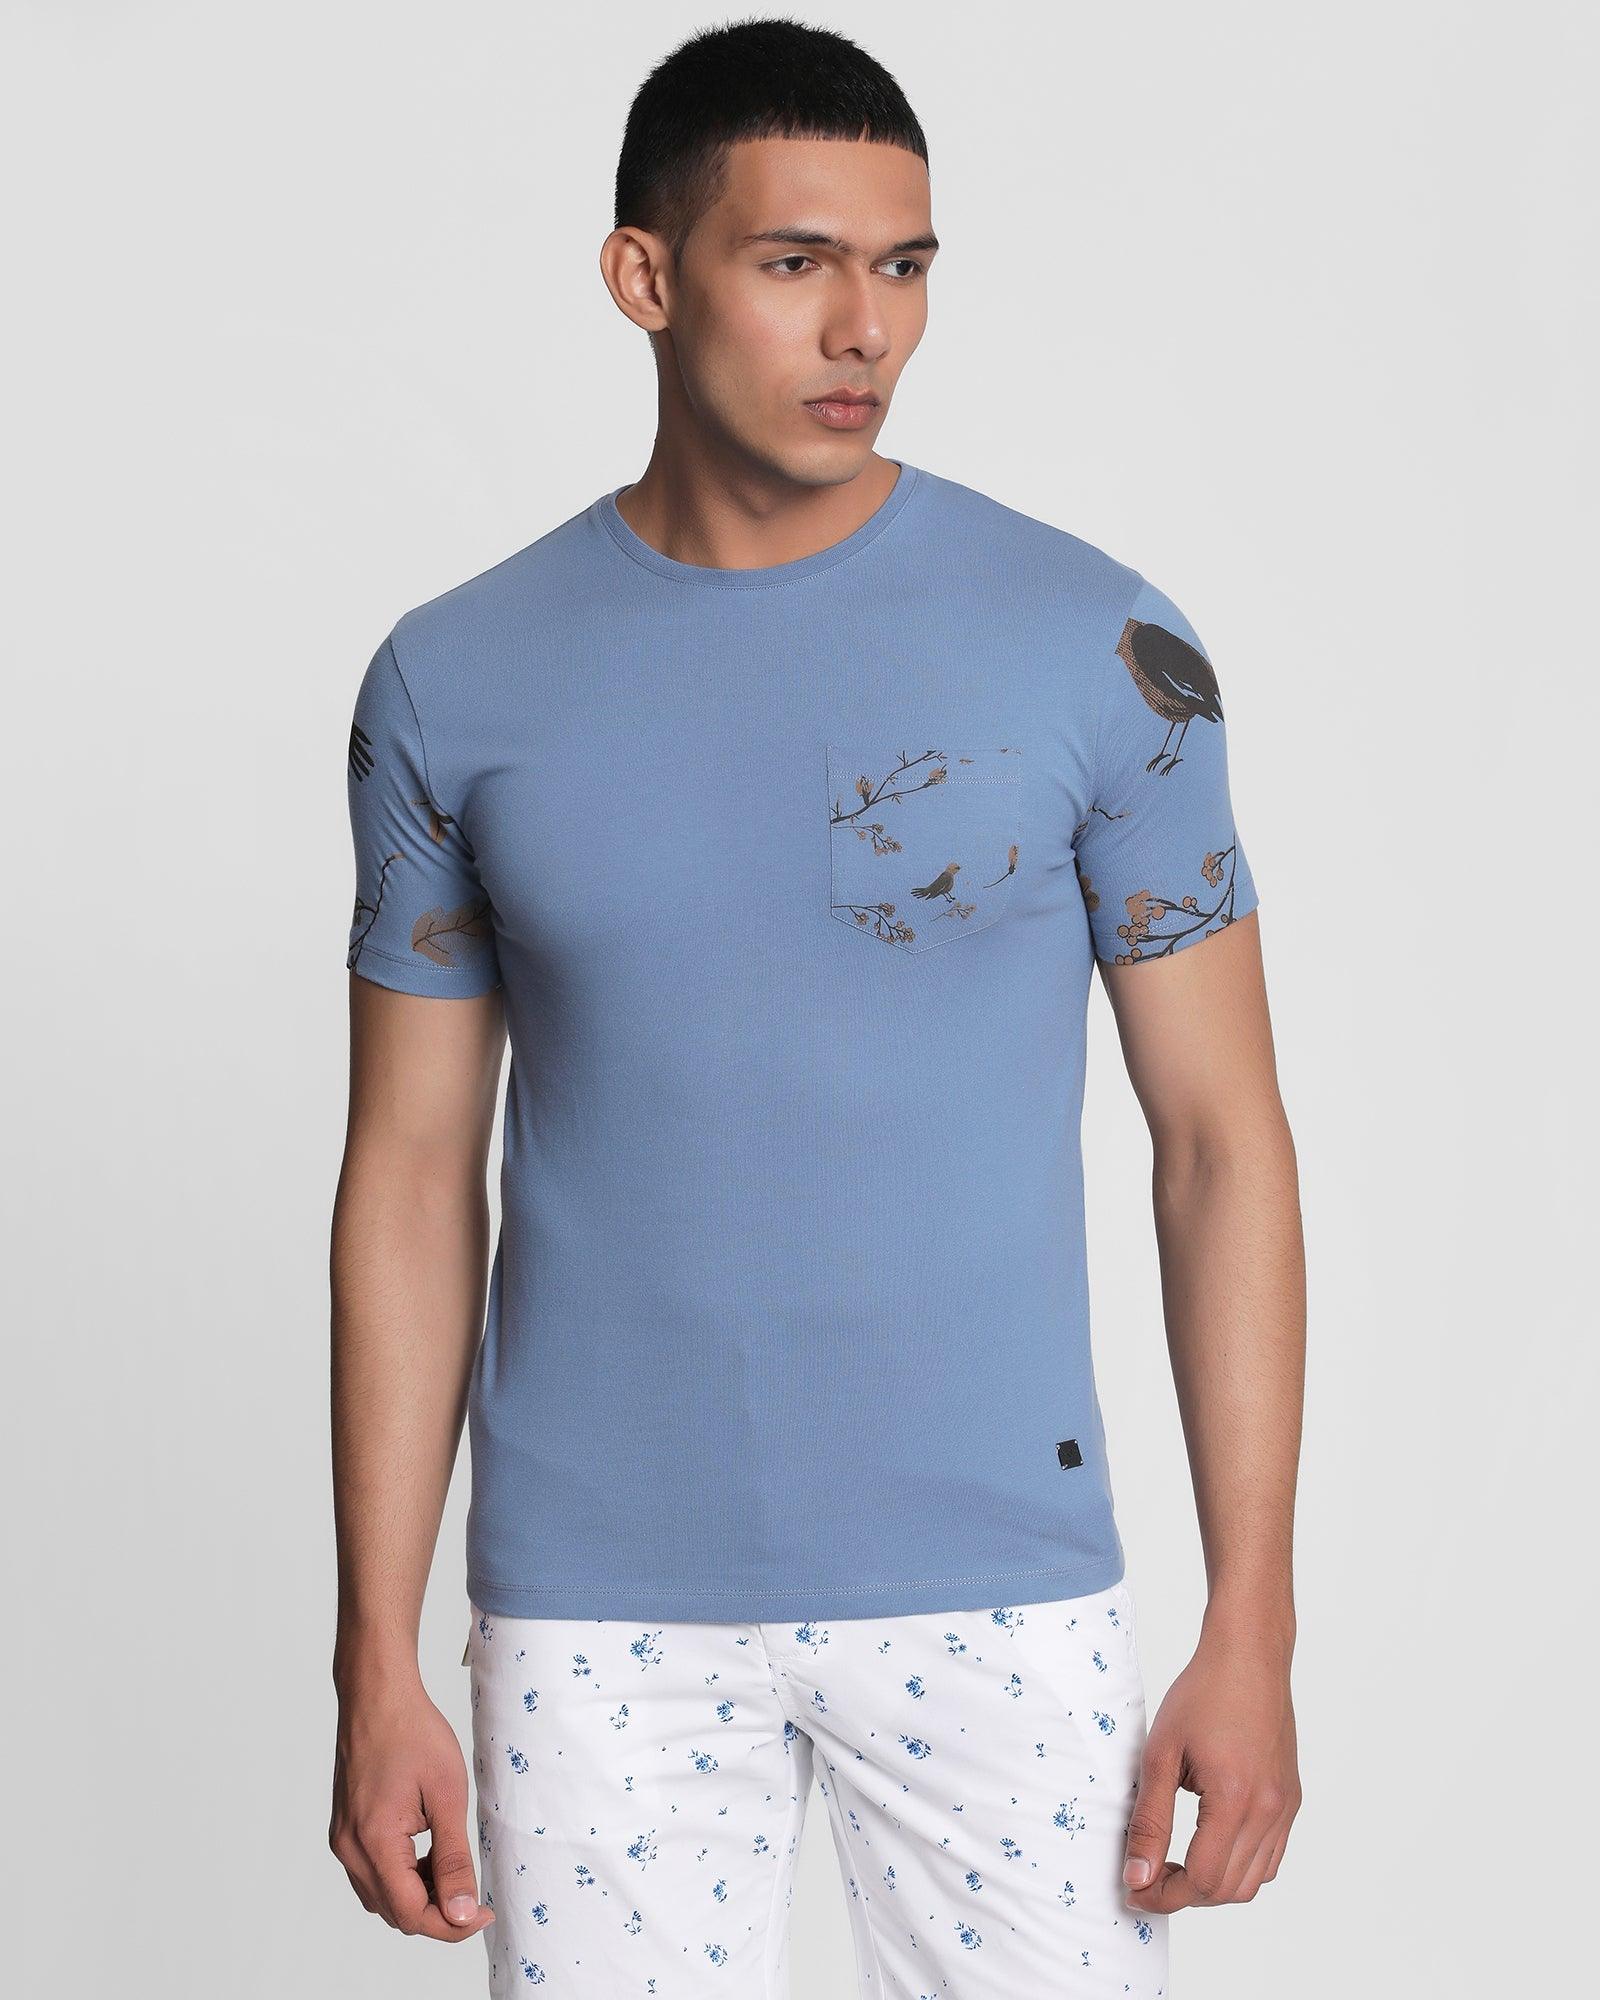 Crew Neck Powder Blue Printed T Shirt - Harold